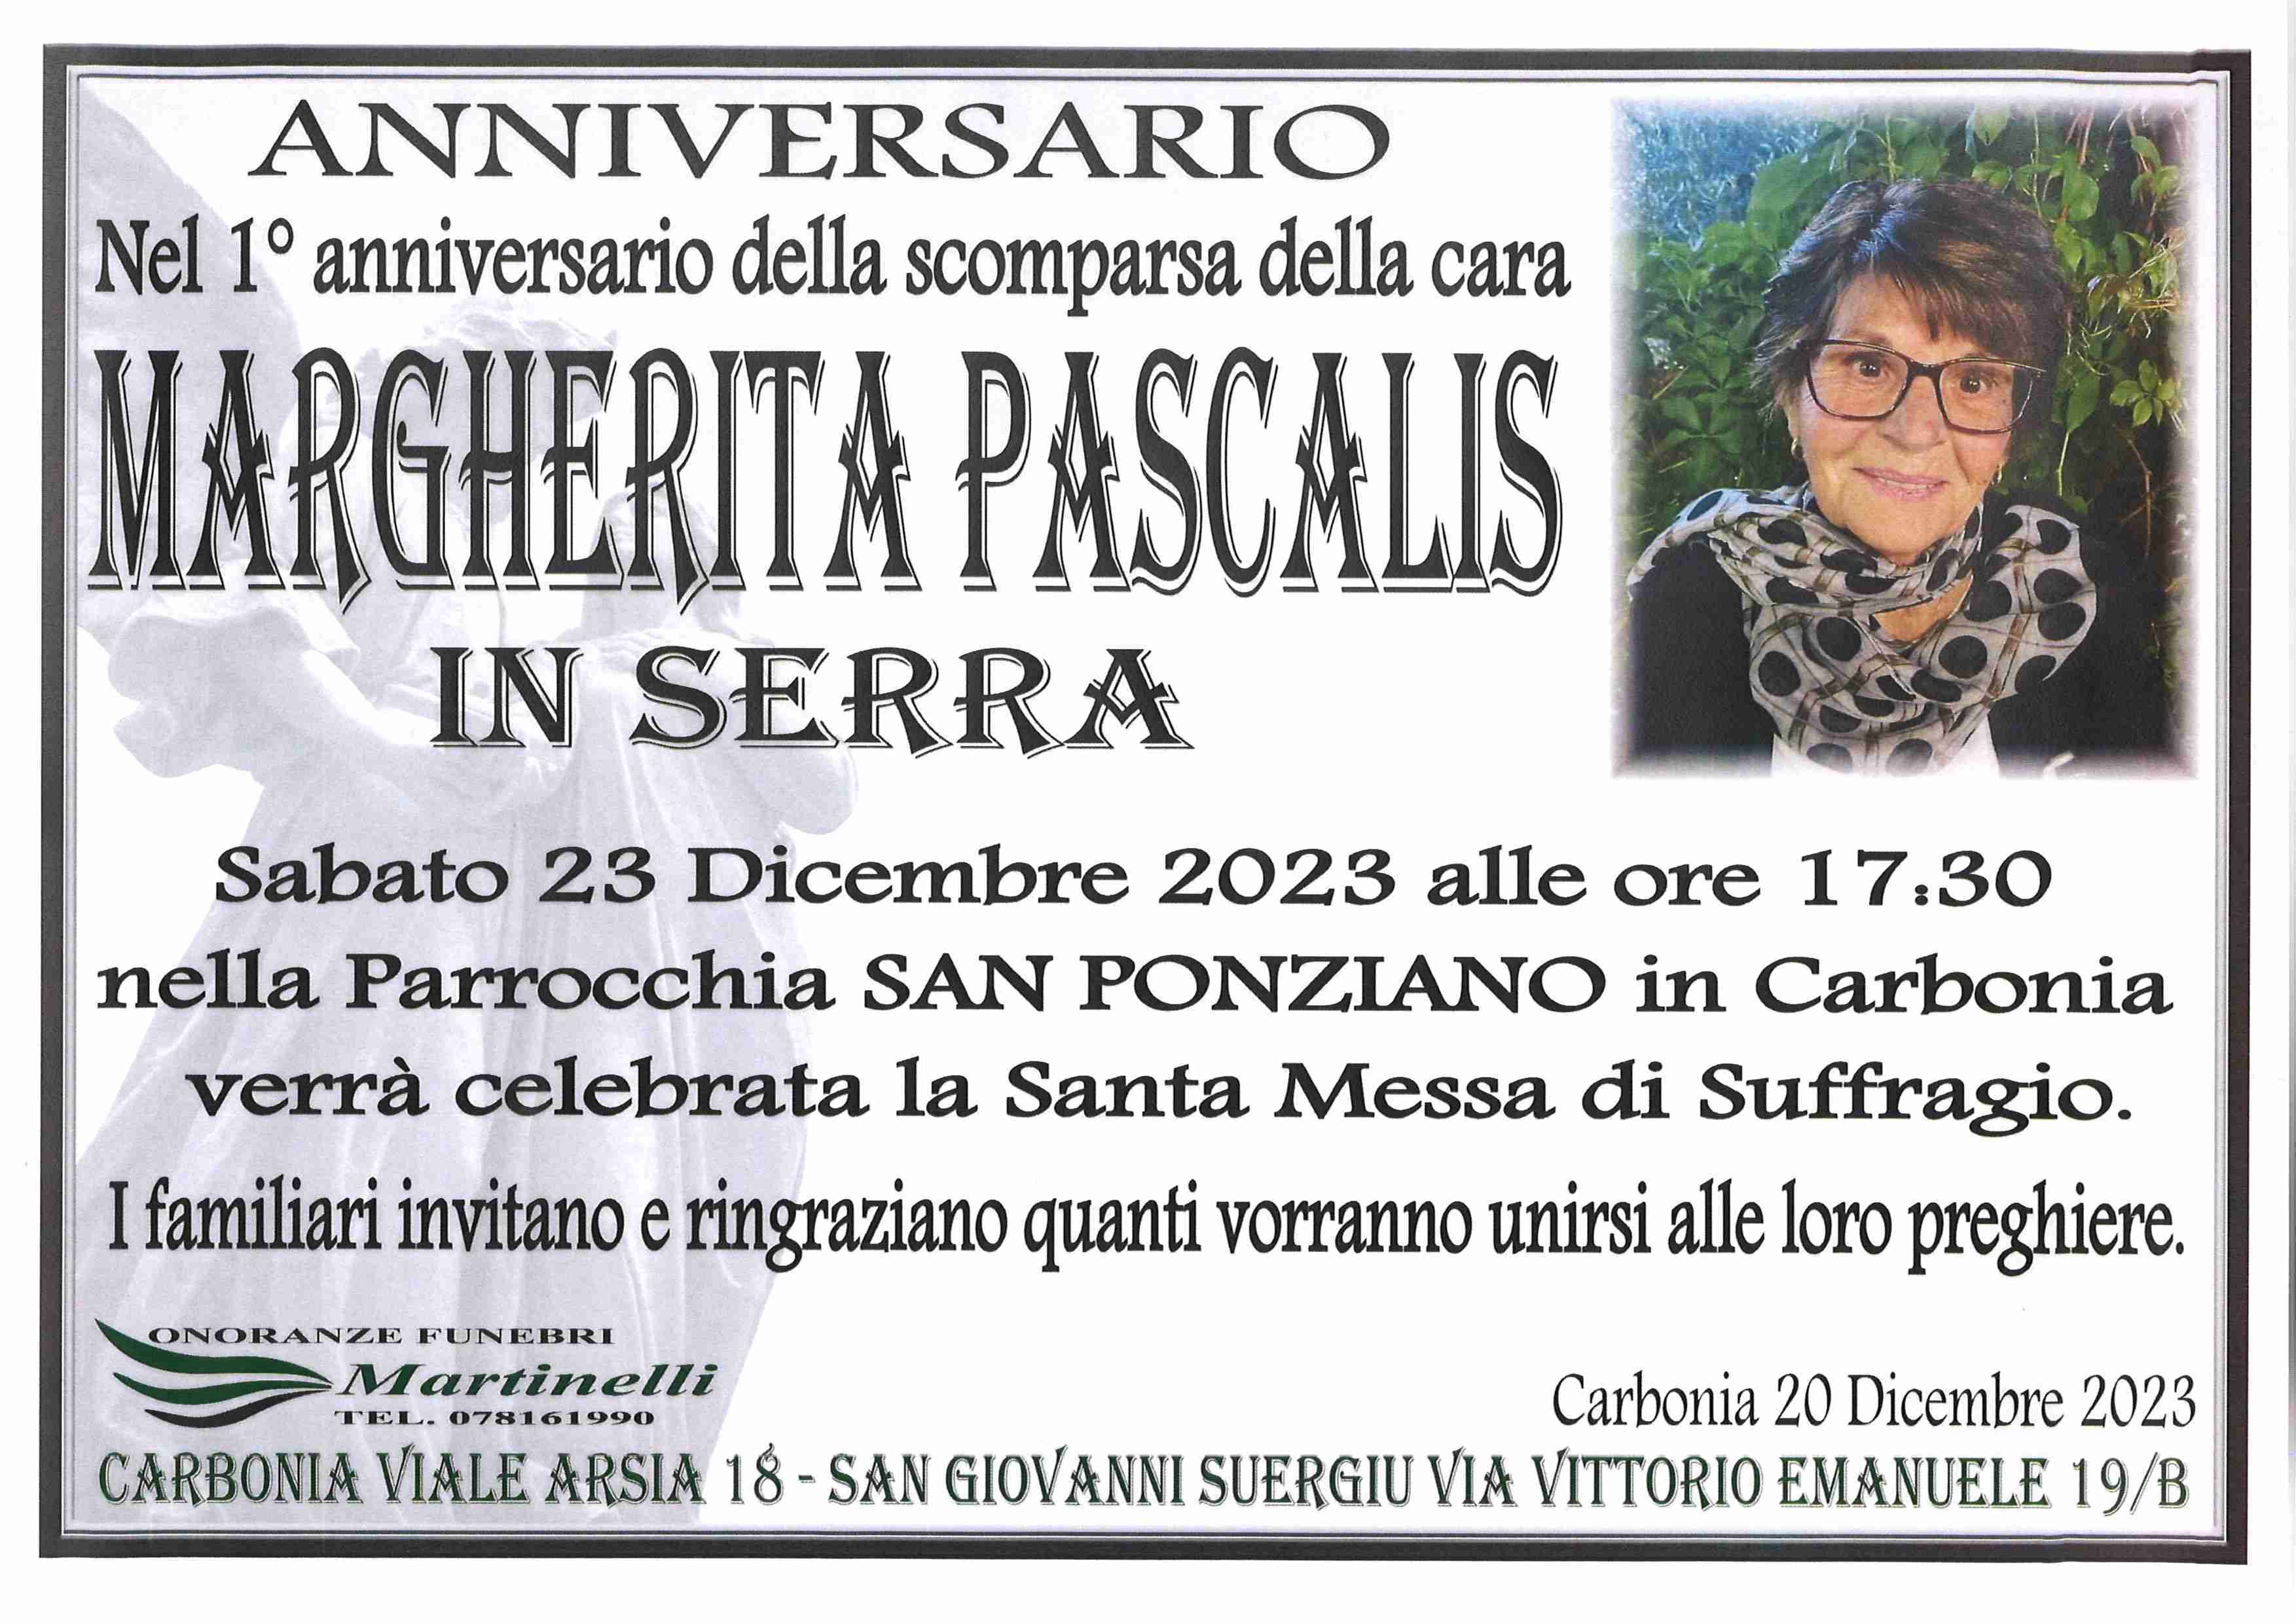 Margherita Pascalis